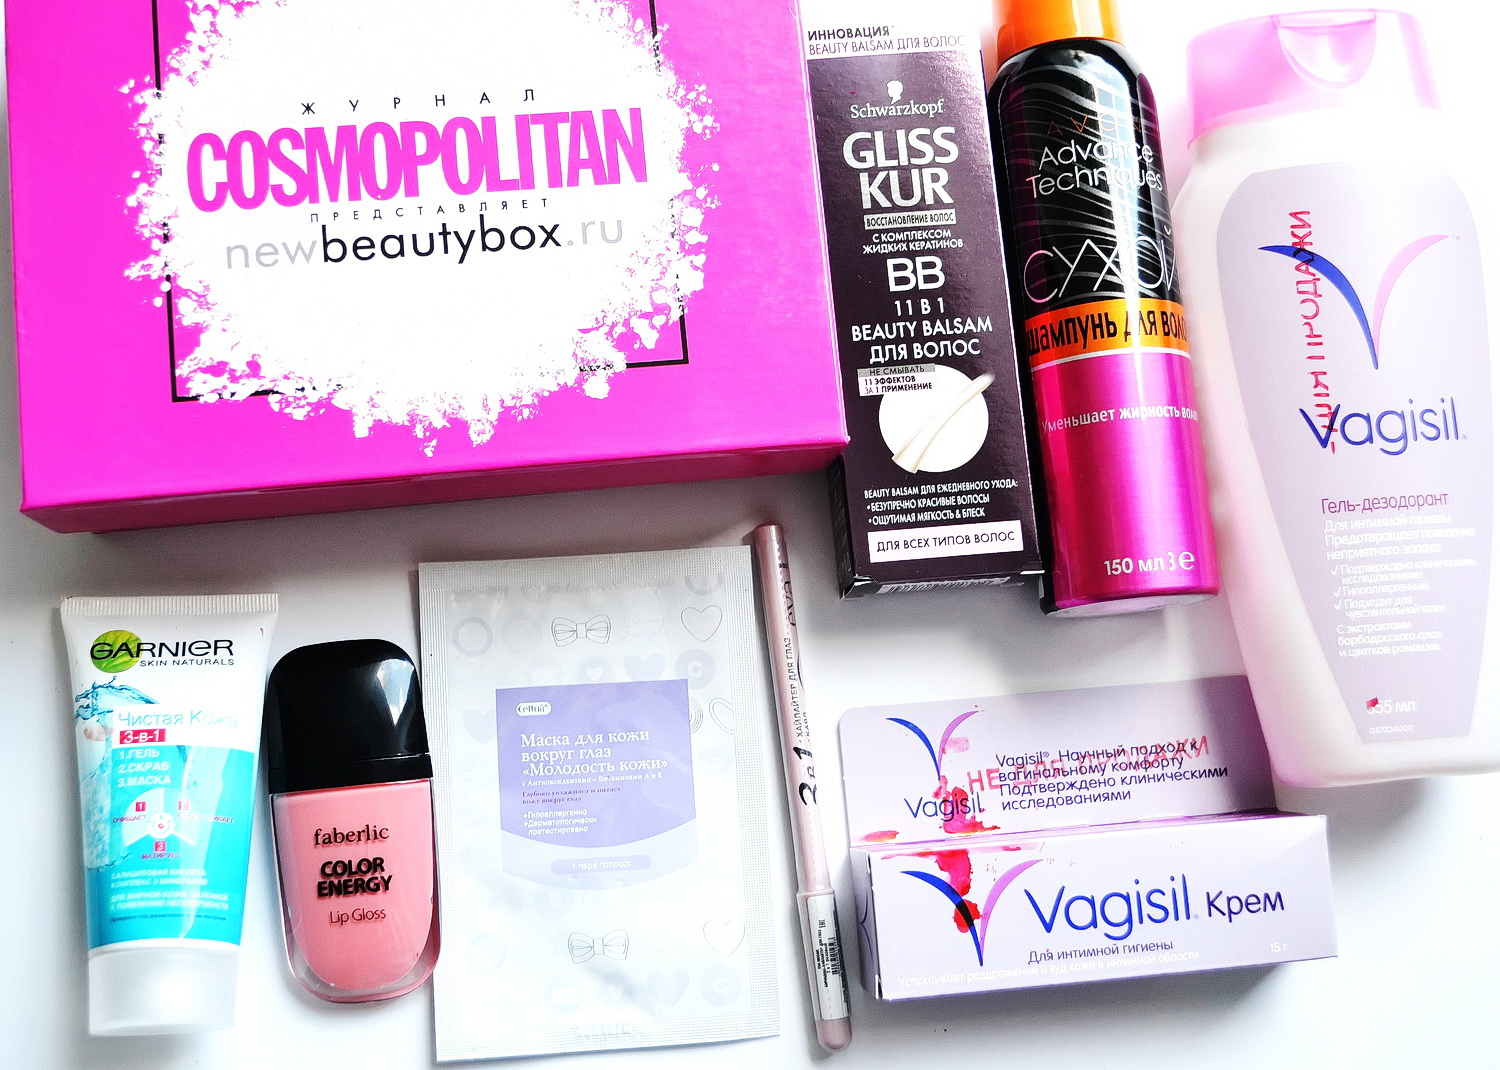 Коробочка New beautybox от Cosmopolitan. блог Марии Тур